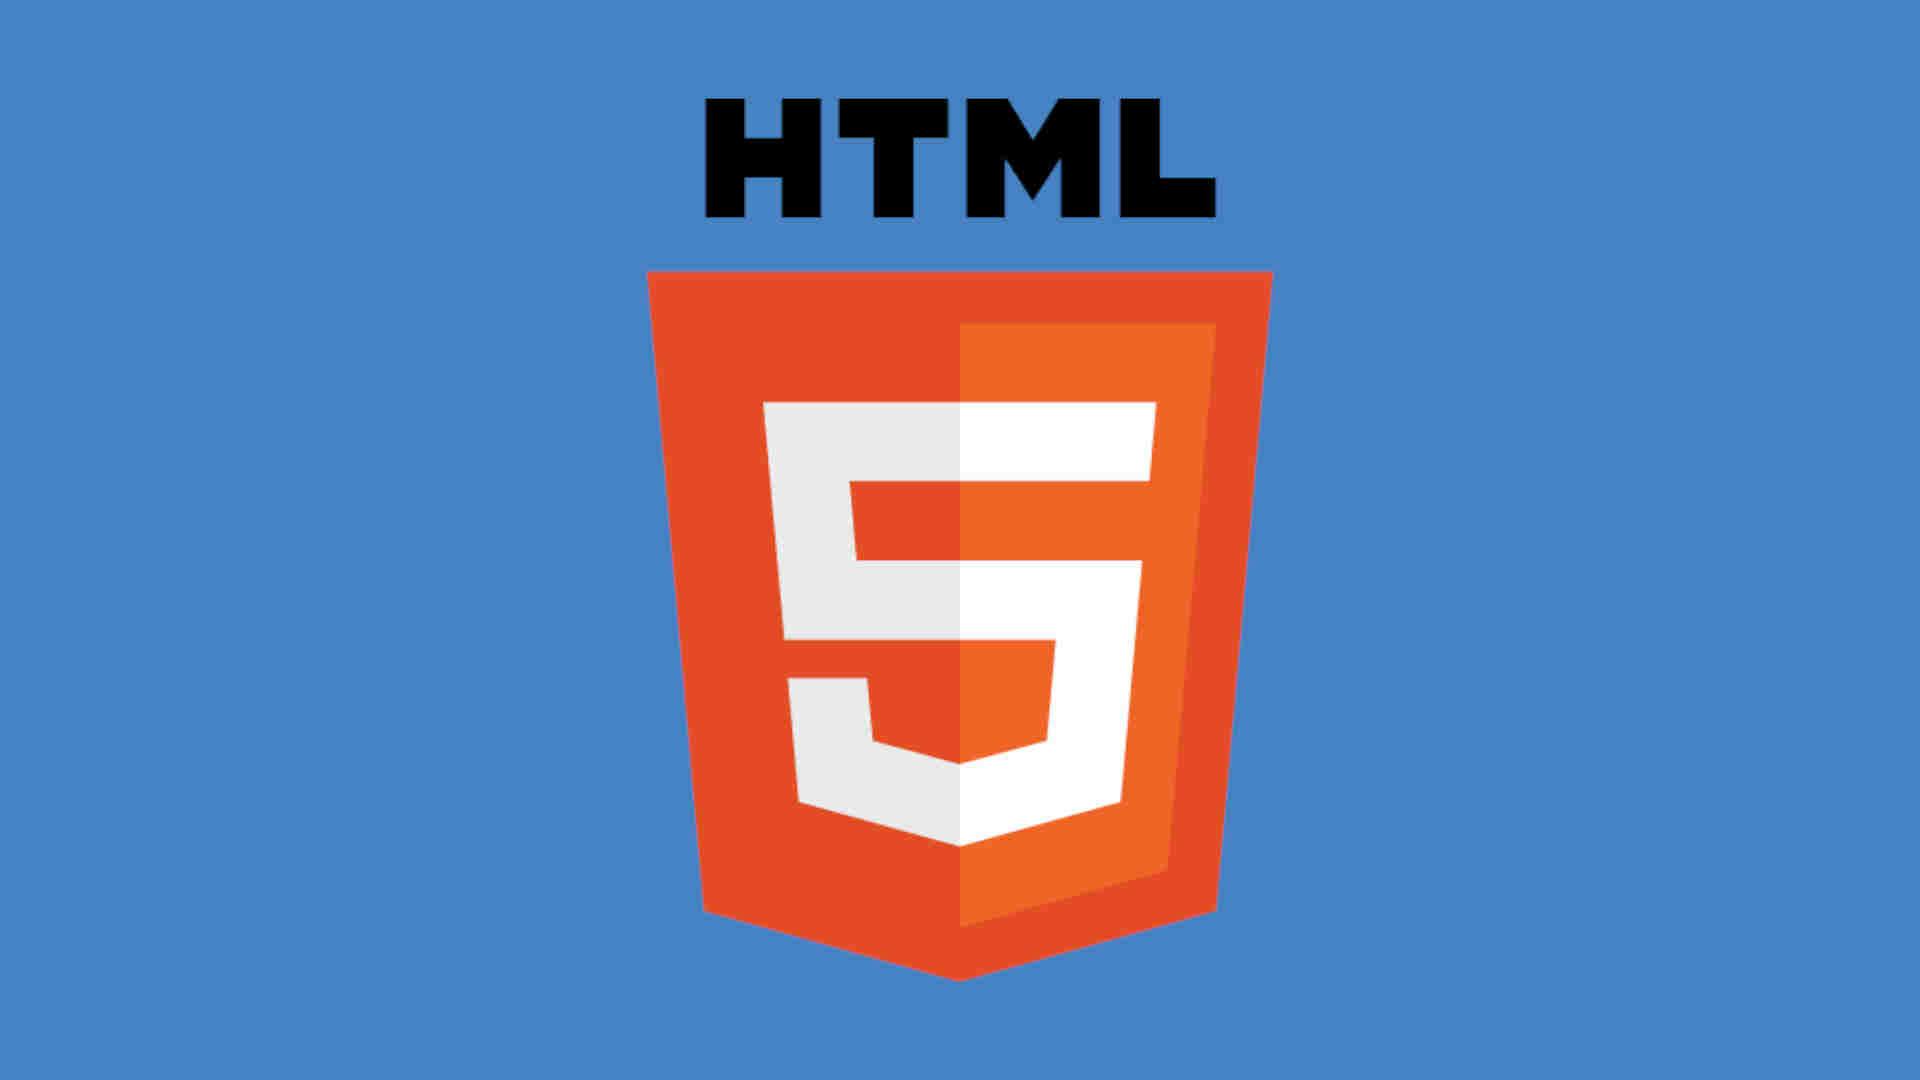 HTML5 logo on a blue background